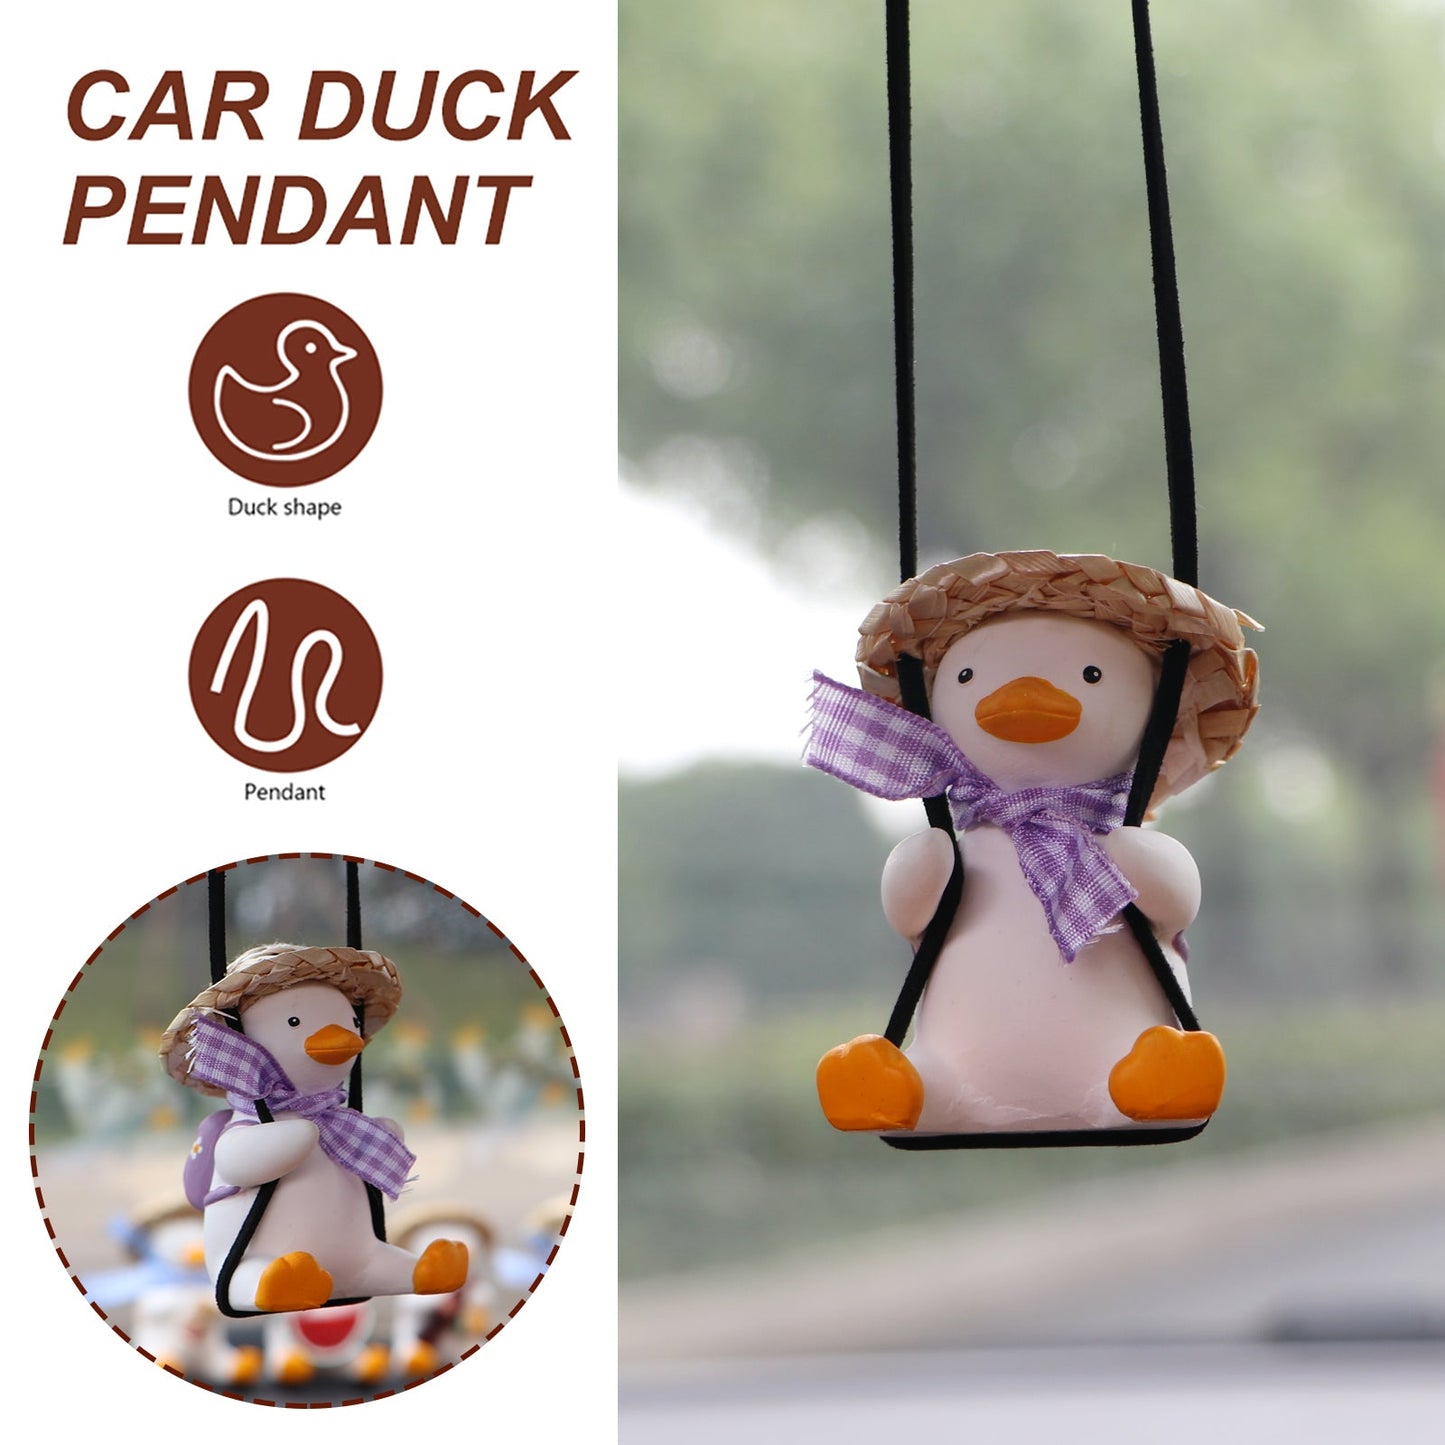 Swing Ducks for Car Interior Decor